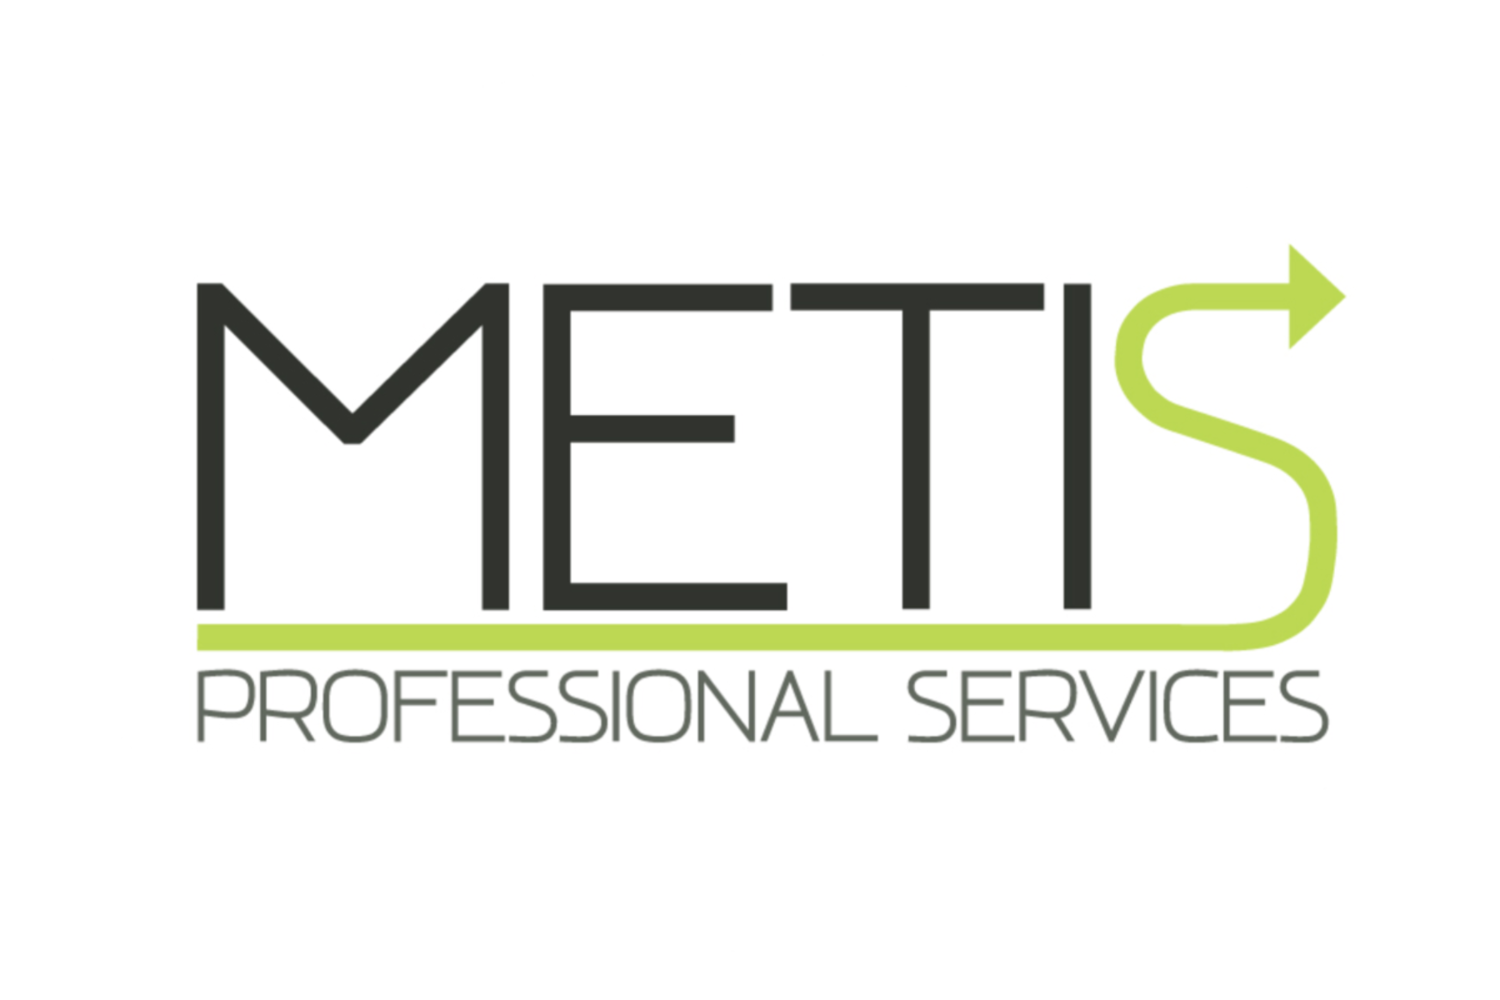 Metis Professional Services